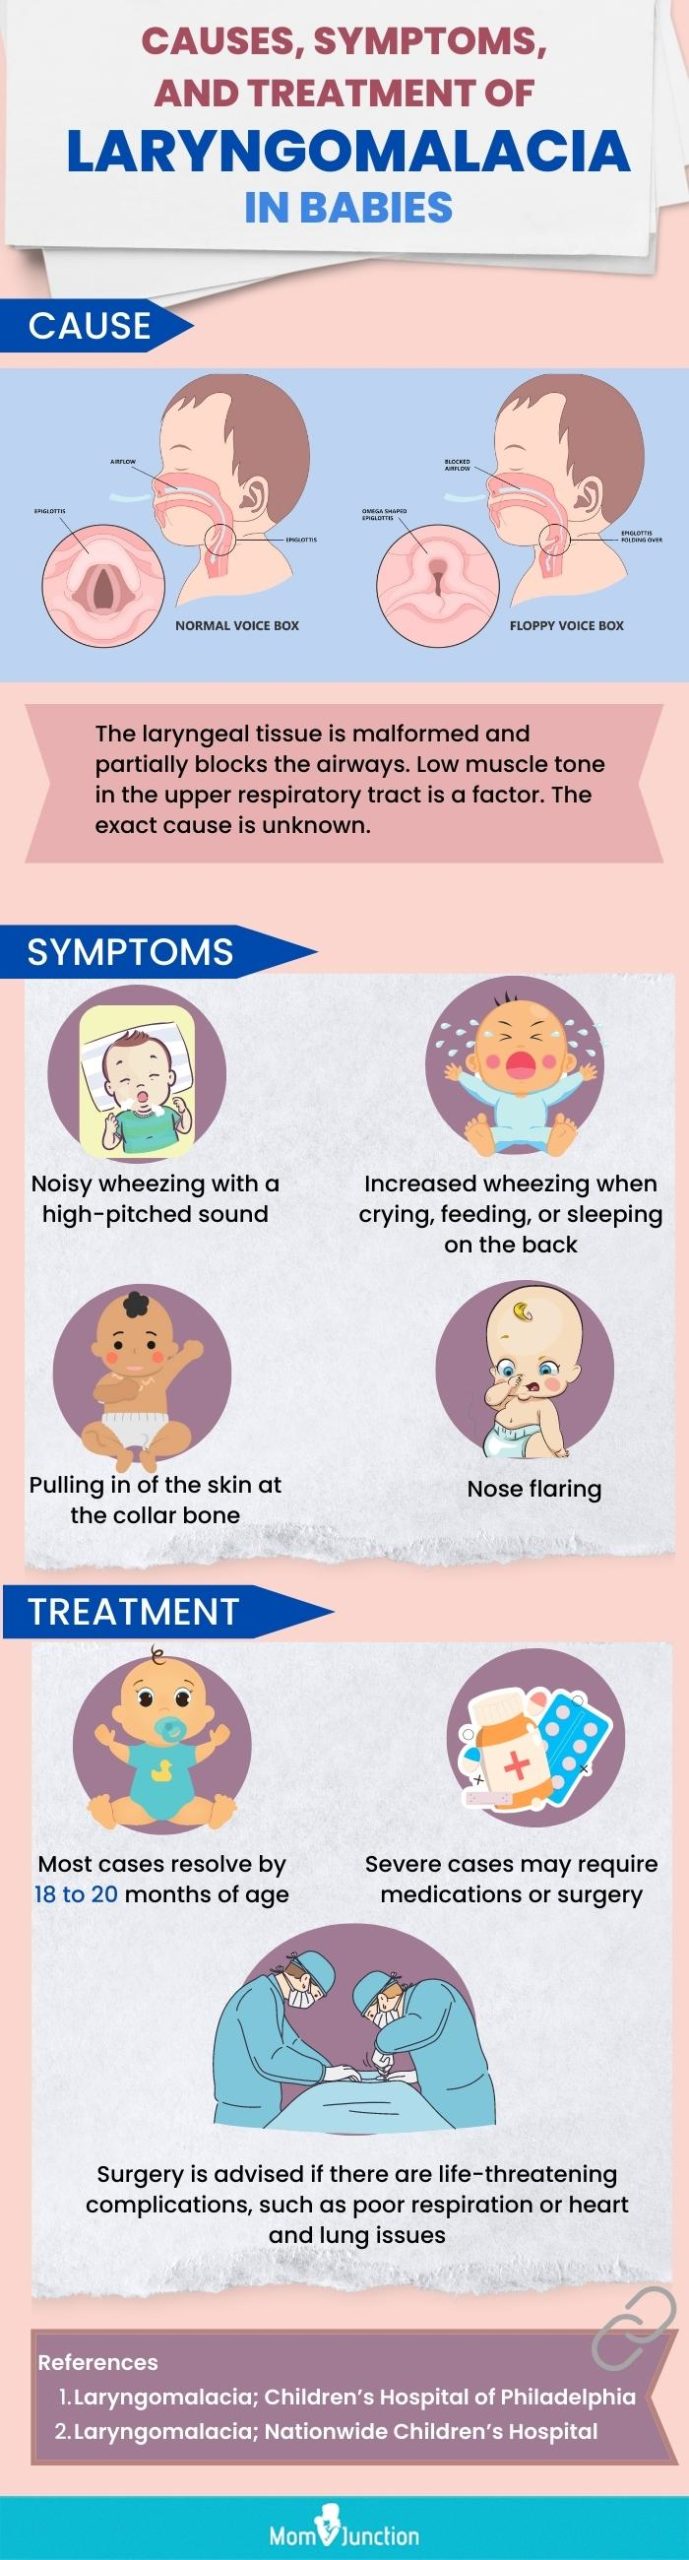 causes symptoms treatment of laryngomalacia in babies (infographic)